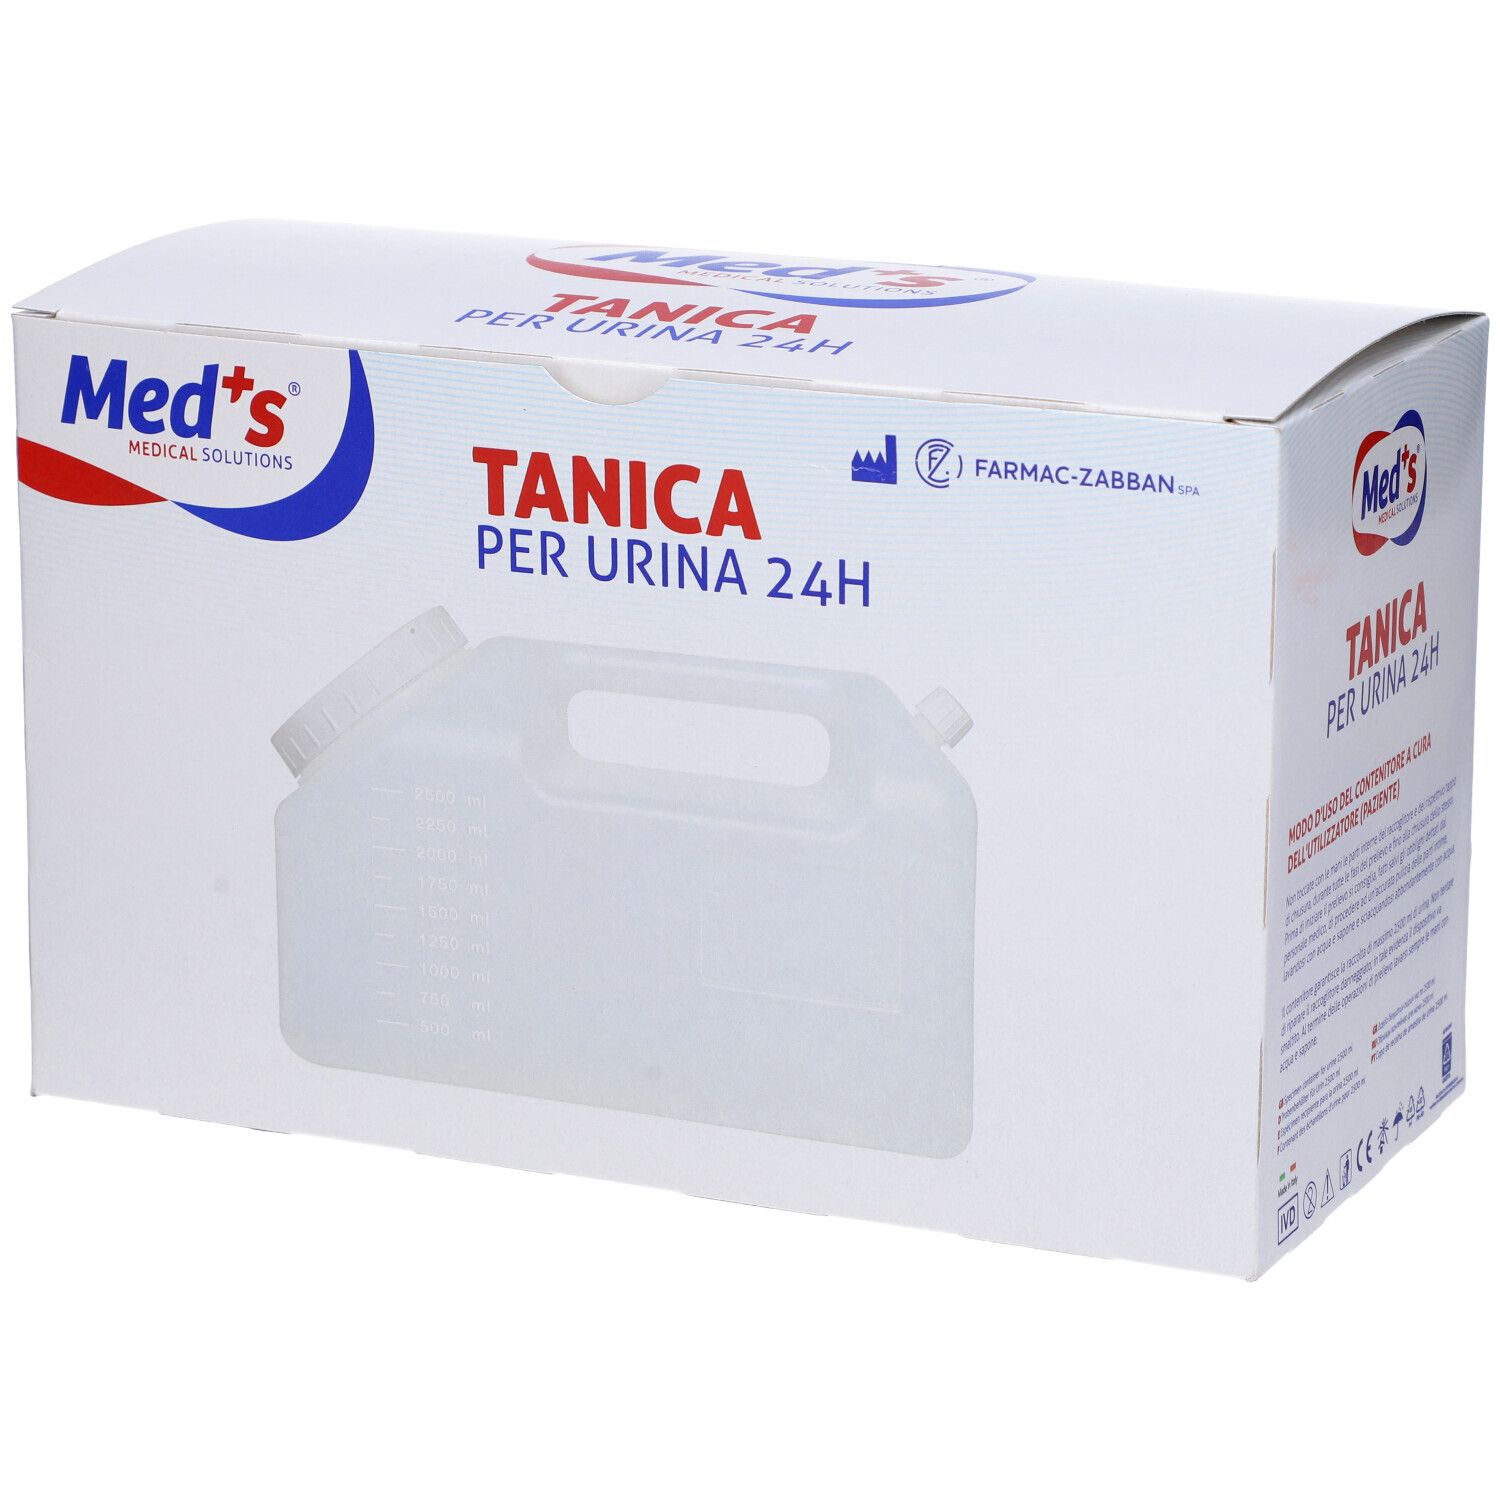 Image of Meds® Tanica per Urina 24H